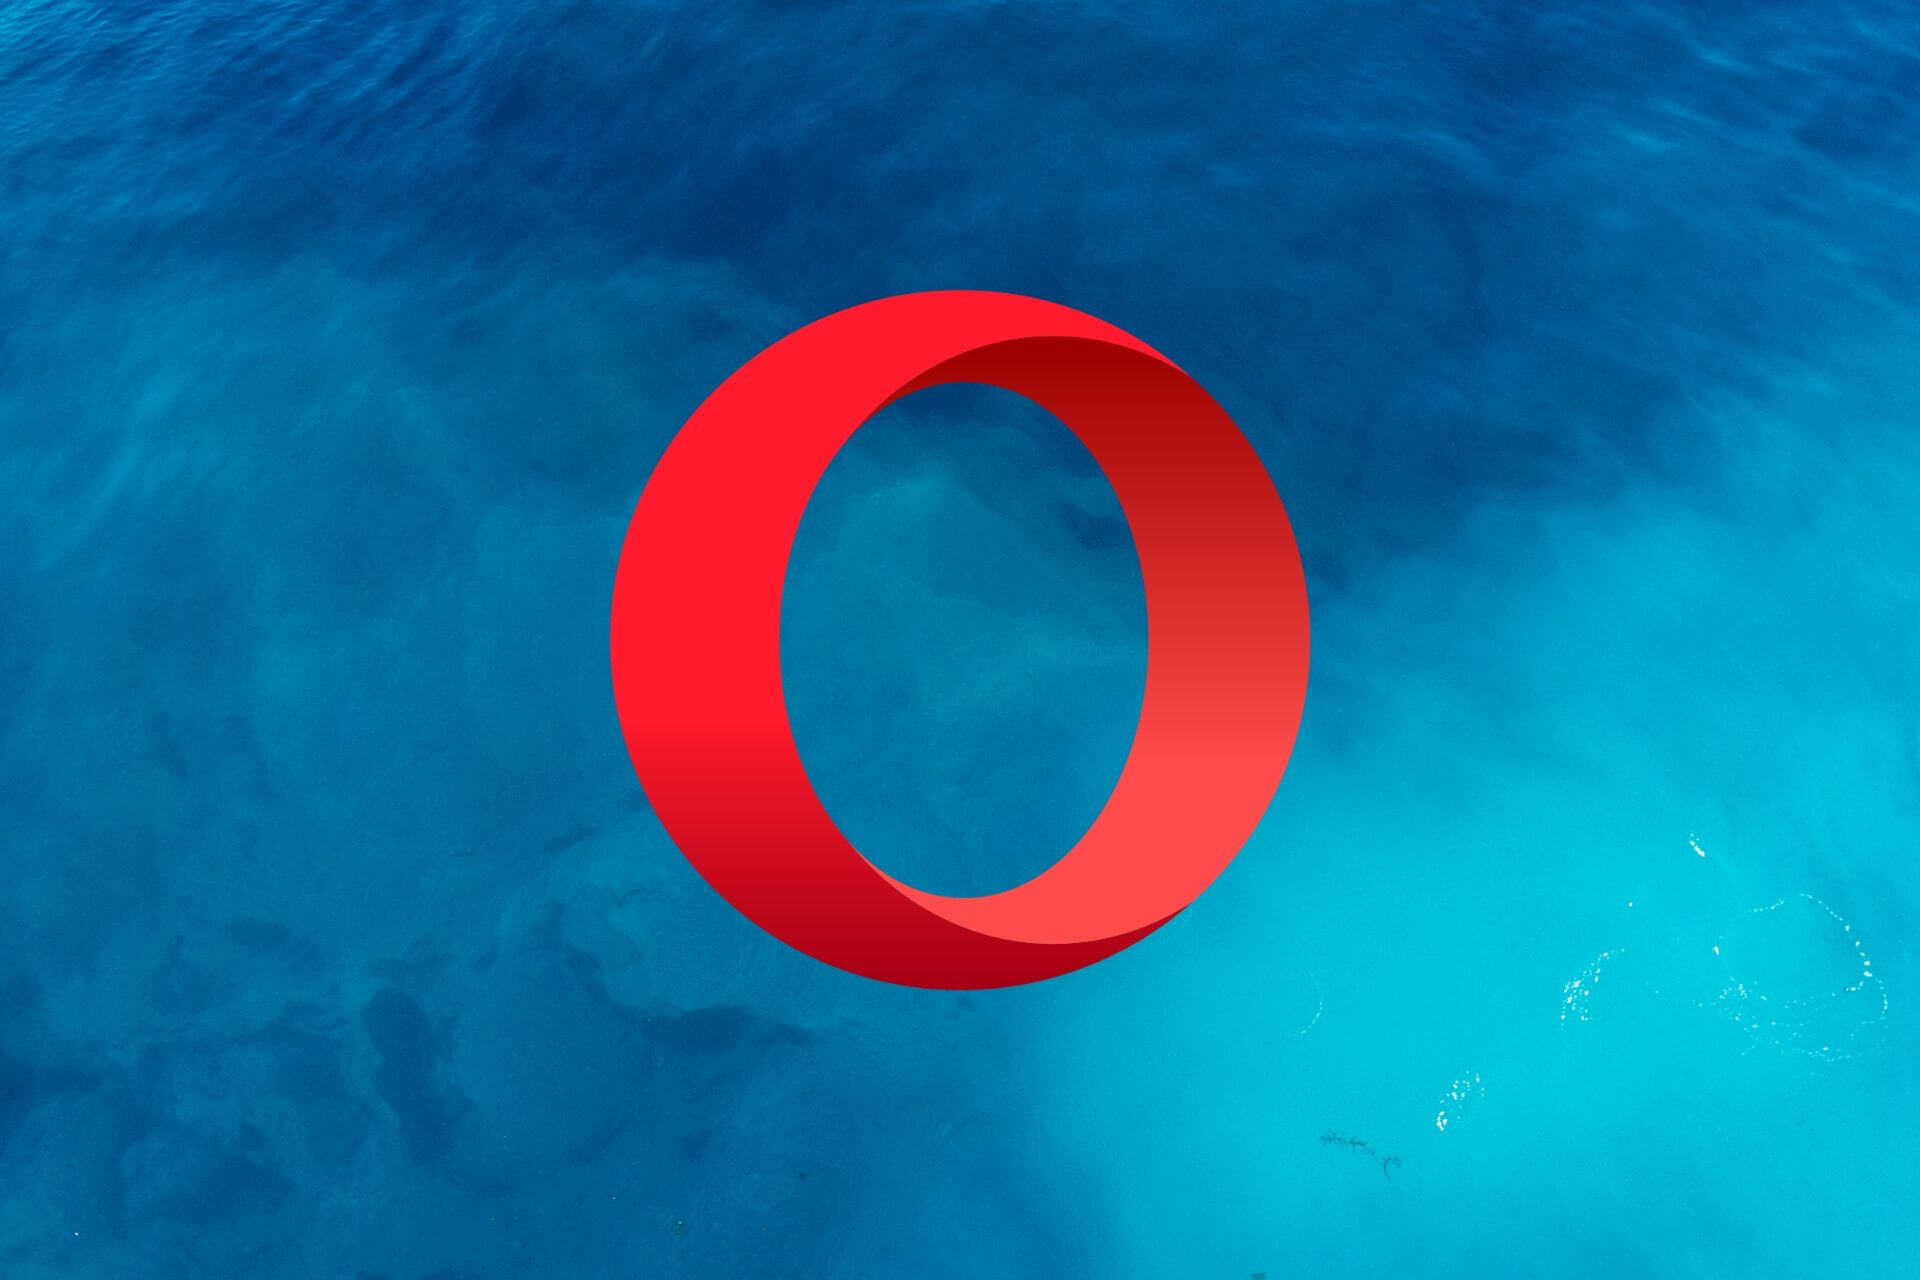 Download Opera Browser Latest Version For Windows 10 (64-bit)